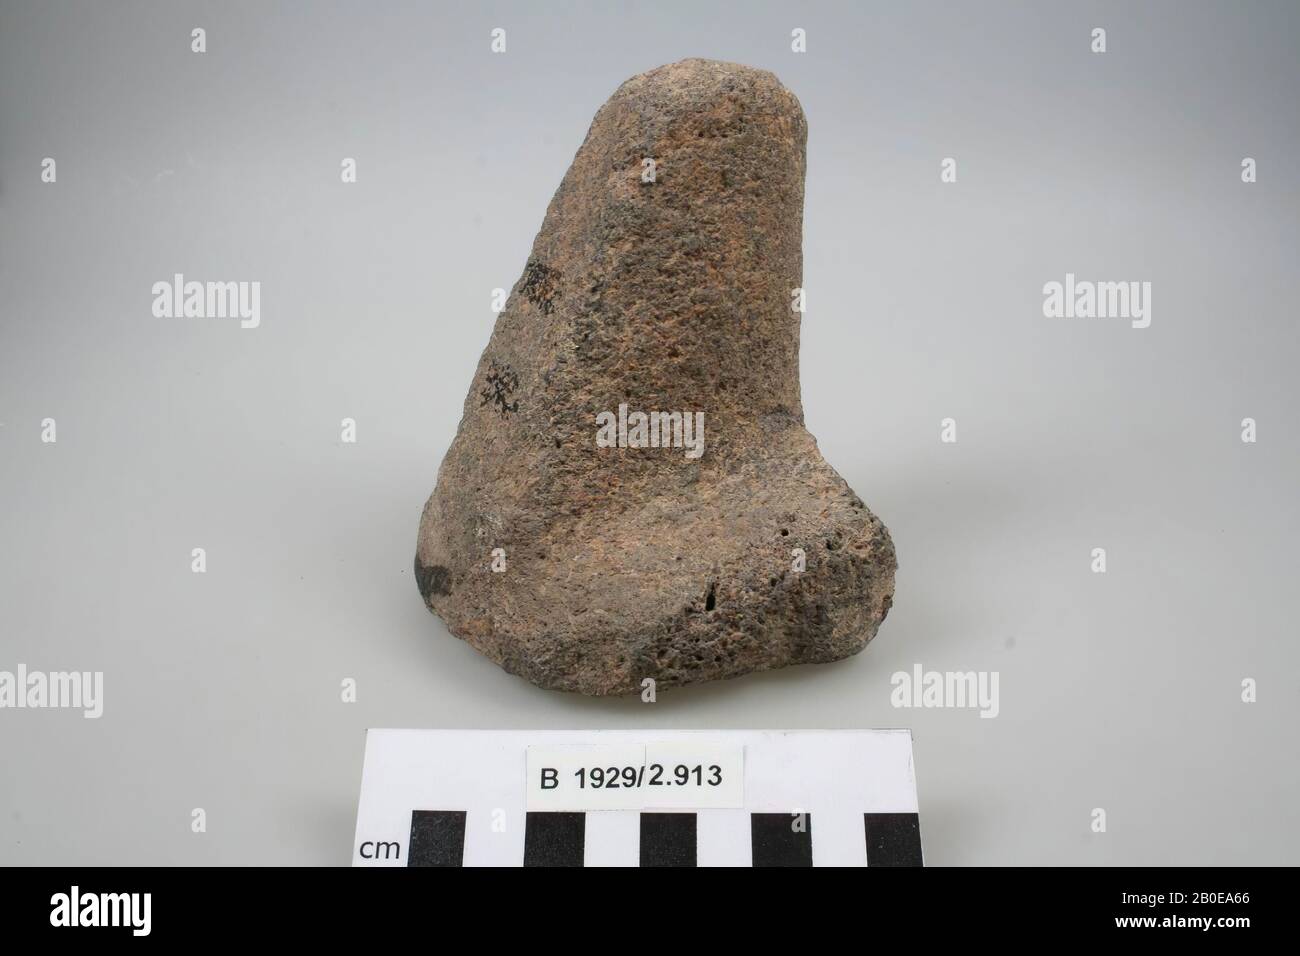 varia, stone, 14.5 x 11.5 x 7 cm, Israel Stock Photo